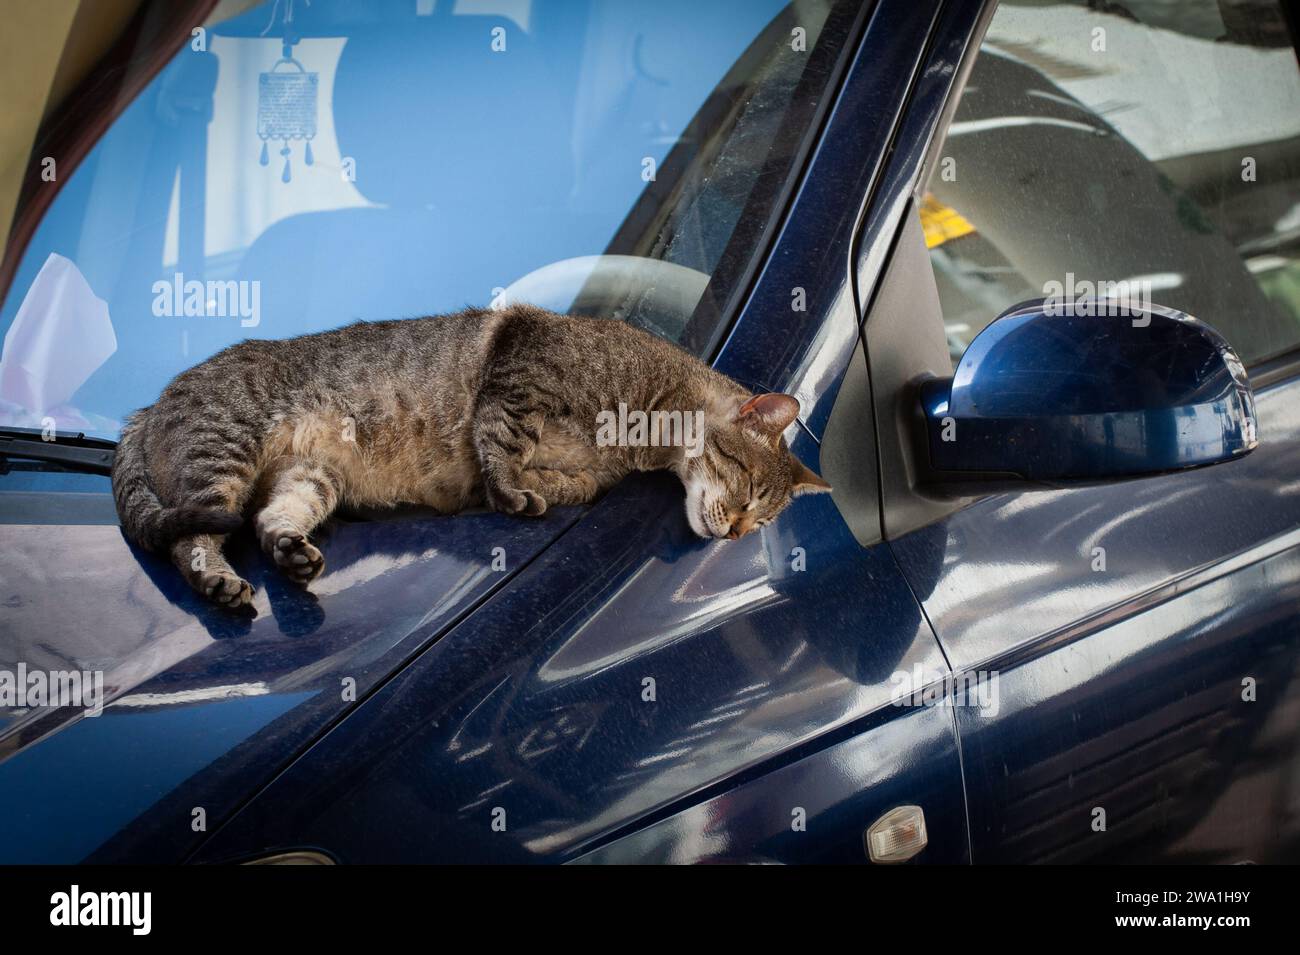 A feral, Jerusalem street cat strectes its body on the warm surface of a shiny blue automobile hood. Stock Photo